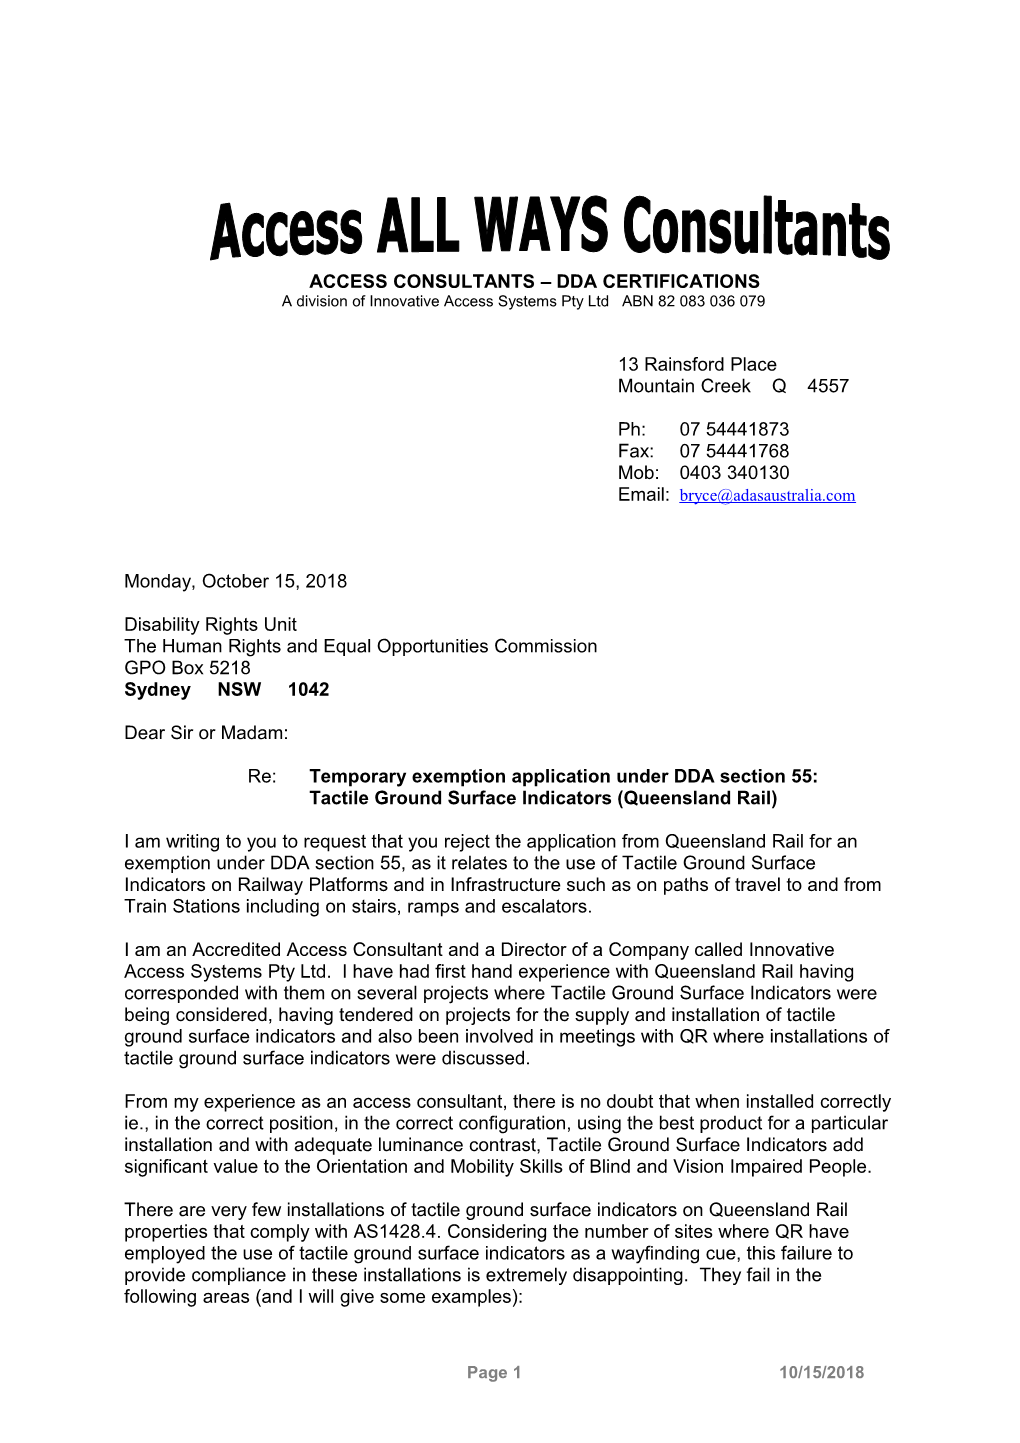 Access Consultants Dda Certifications